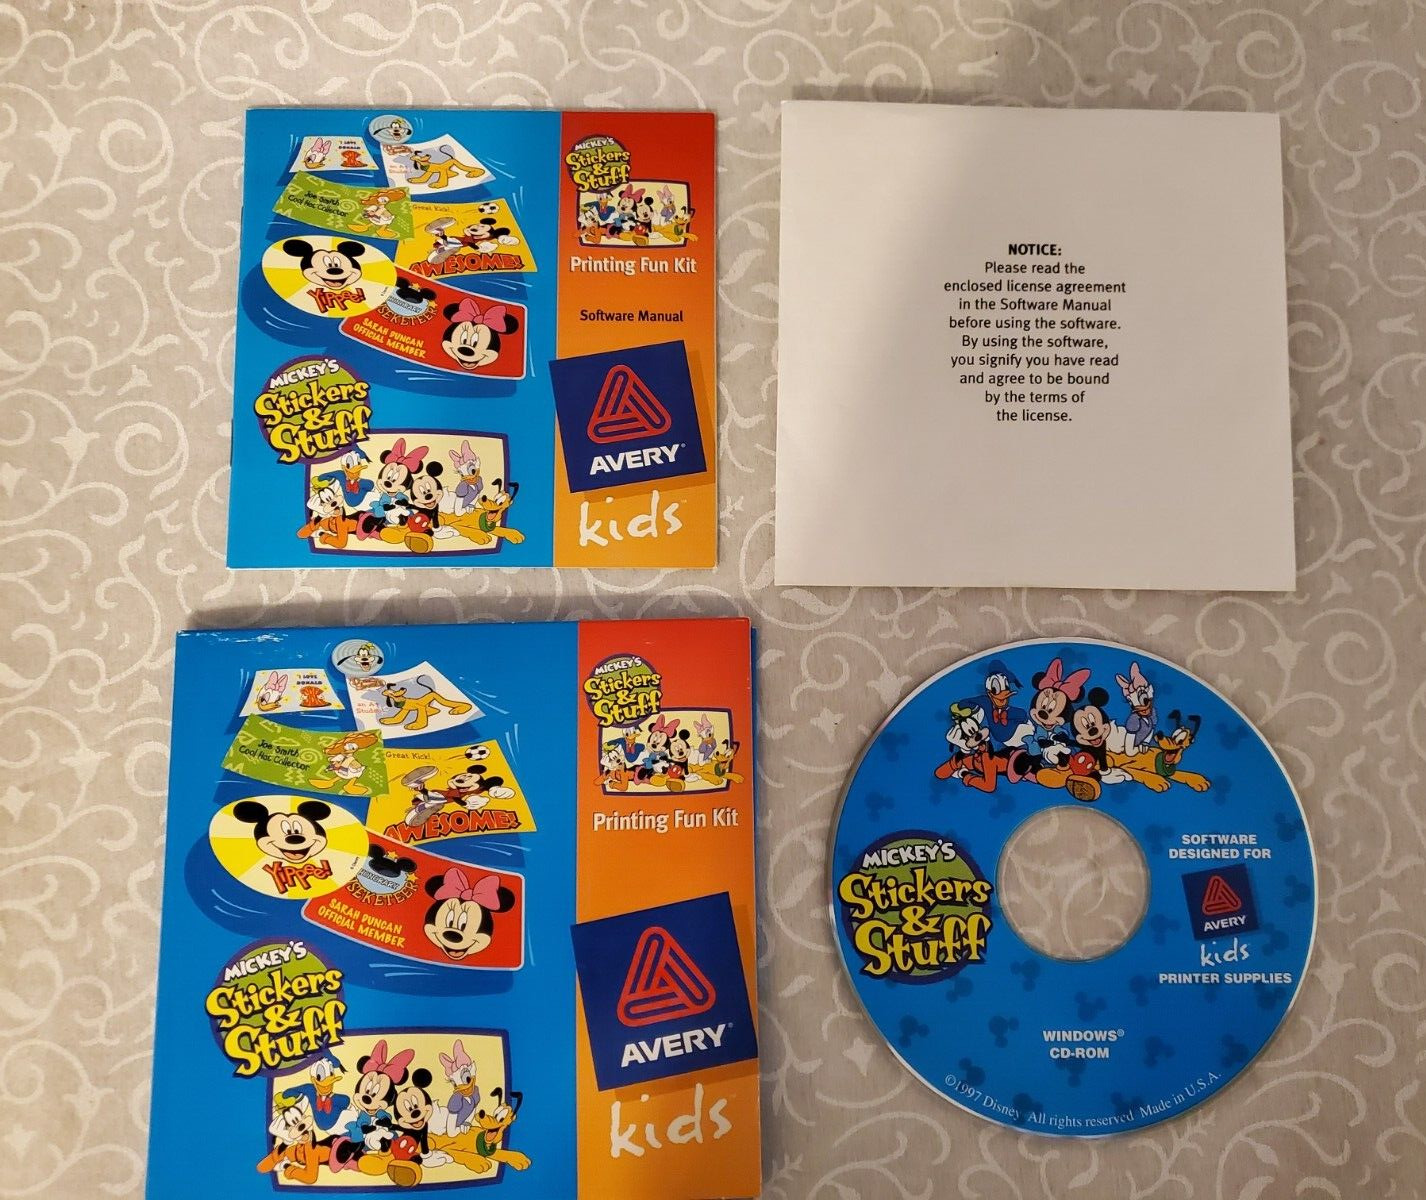 Mickeys Stickers & Stuff - Printing Fun Kit - Vintage CD ROM WINDOWS 95